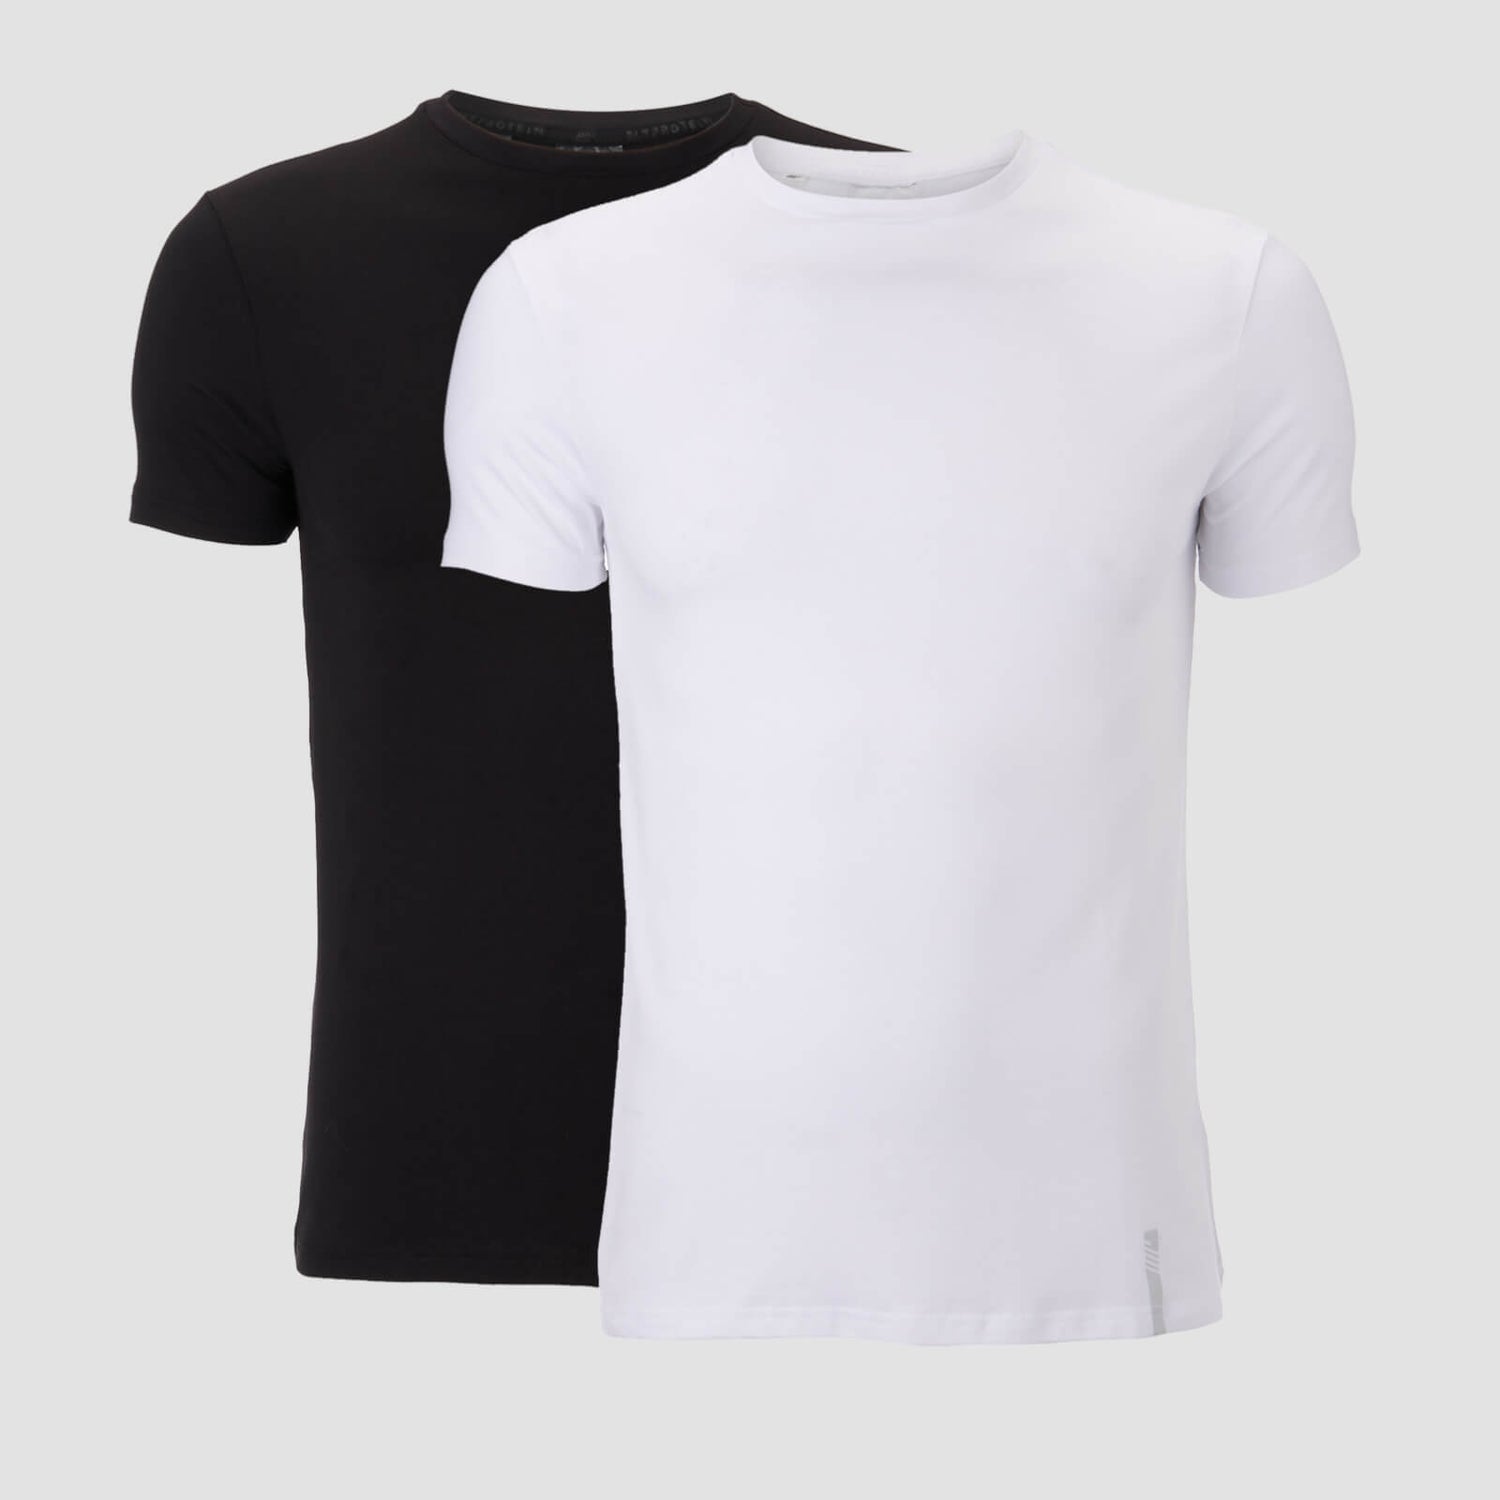 Luxe Classic Crew T-Shirt (2 Pack) - Sort/Hvid - M